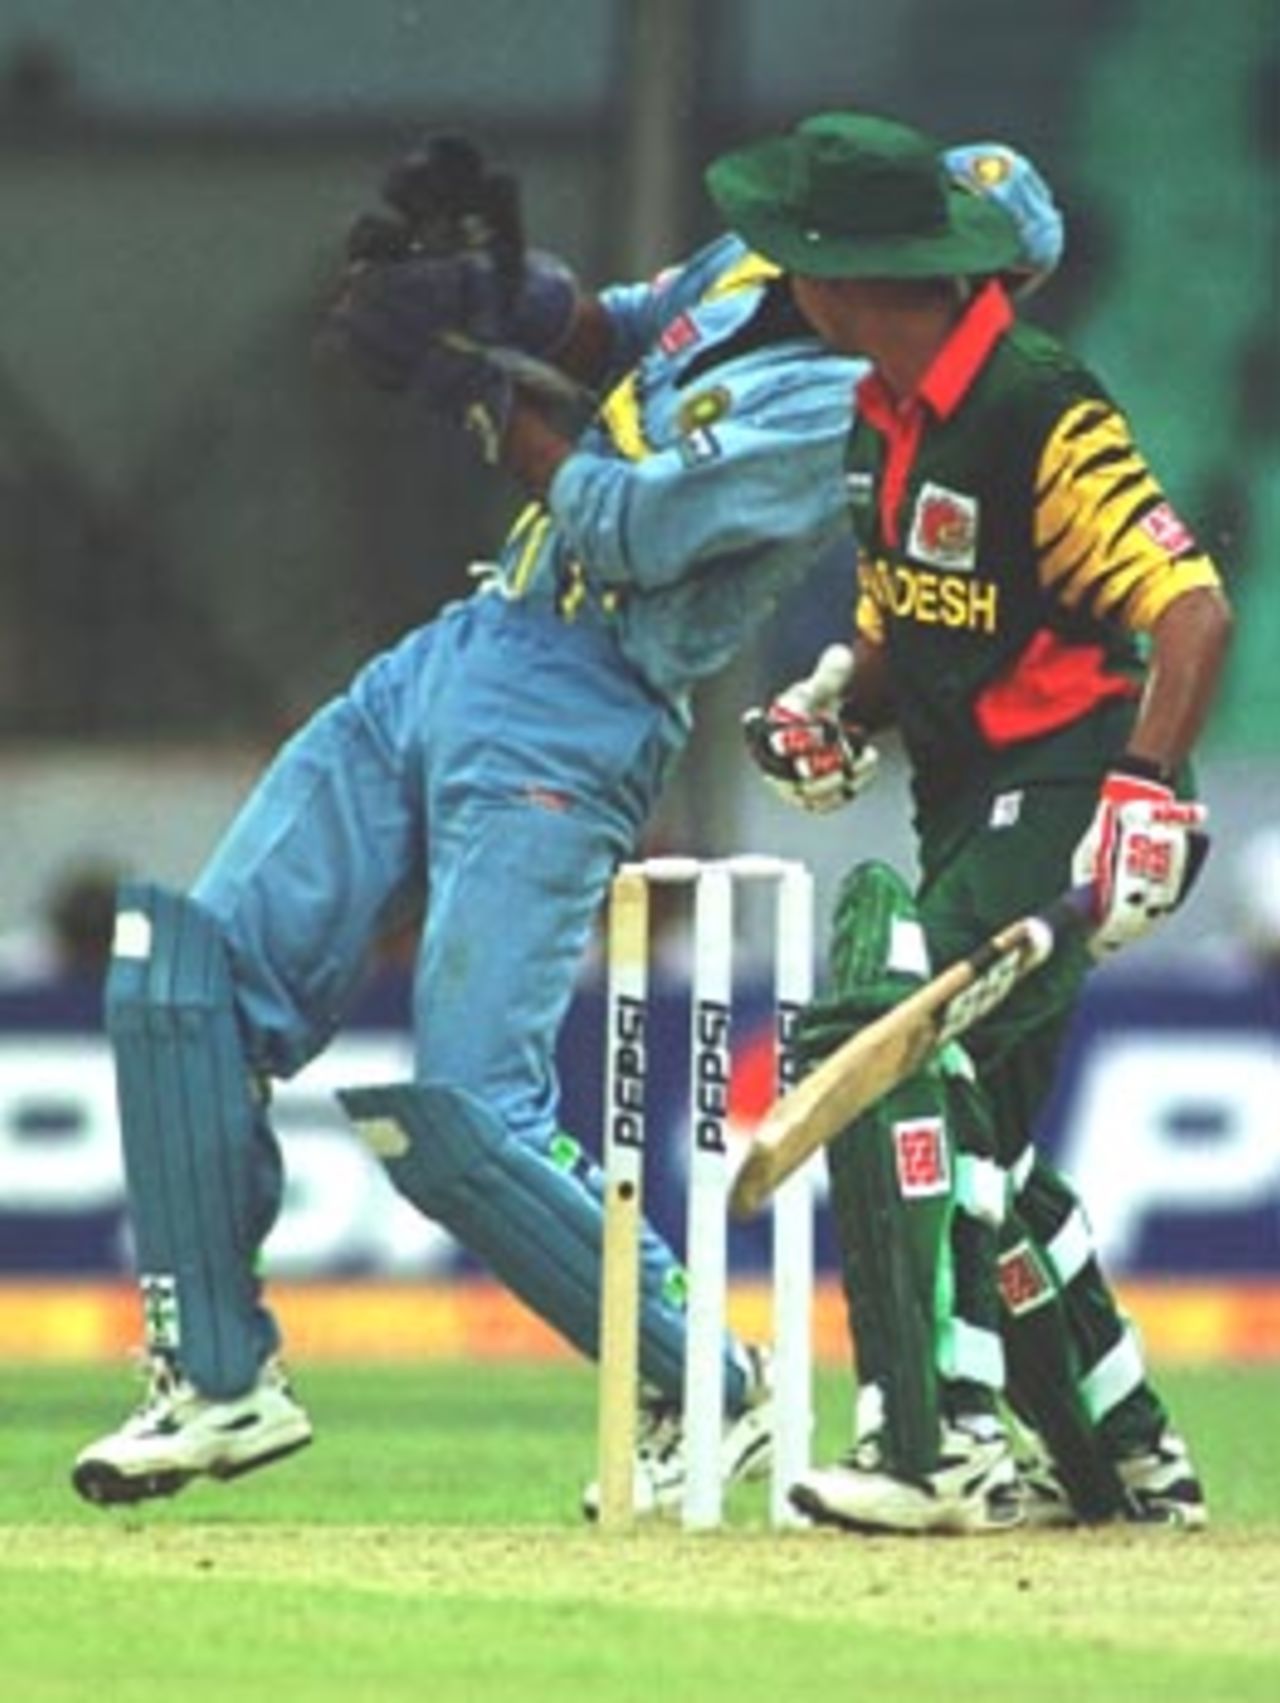 Keeper Karim gets hit by a Kumble delivery, Asia Cup 1999/00, 2nd Match, Bangladesh v India, Bangabandhu National Stadium, Dhaka. 30 May 2000